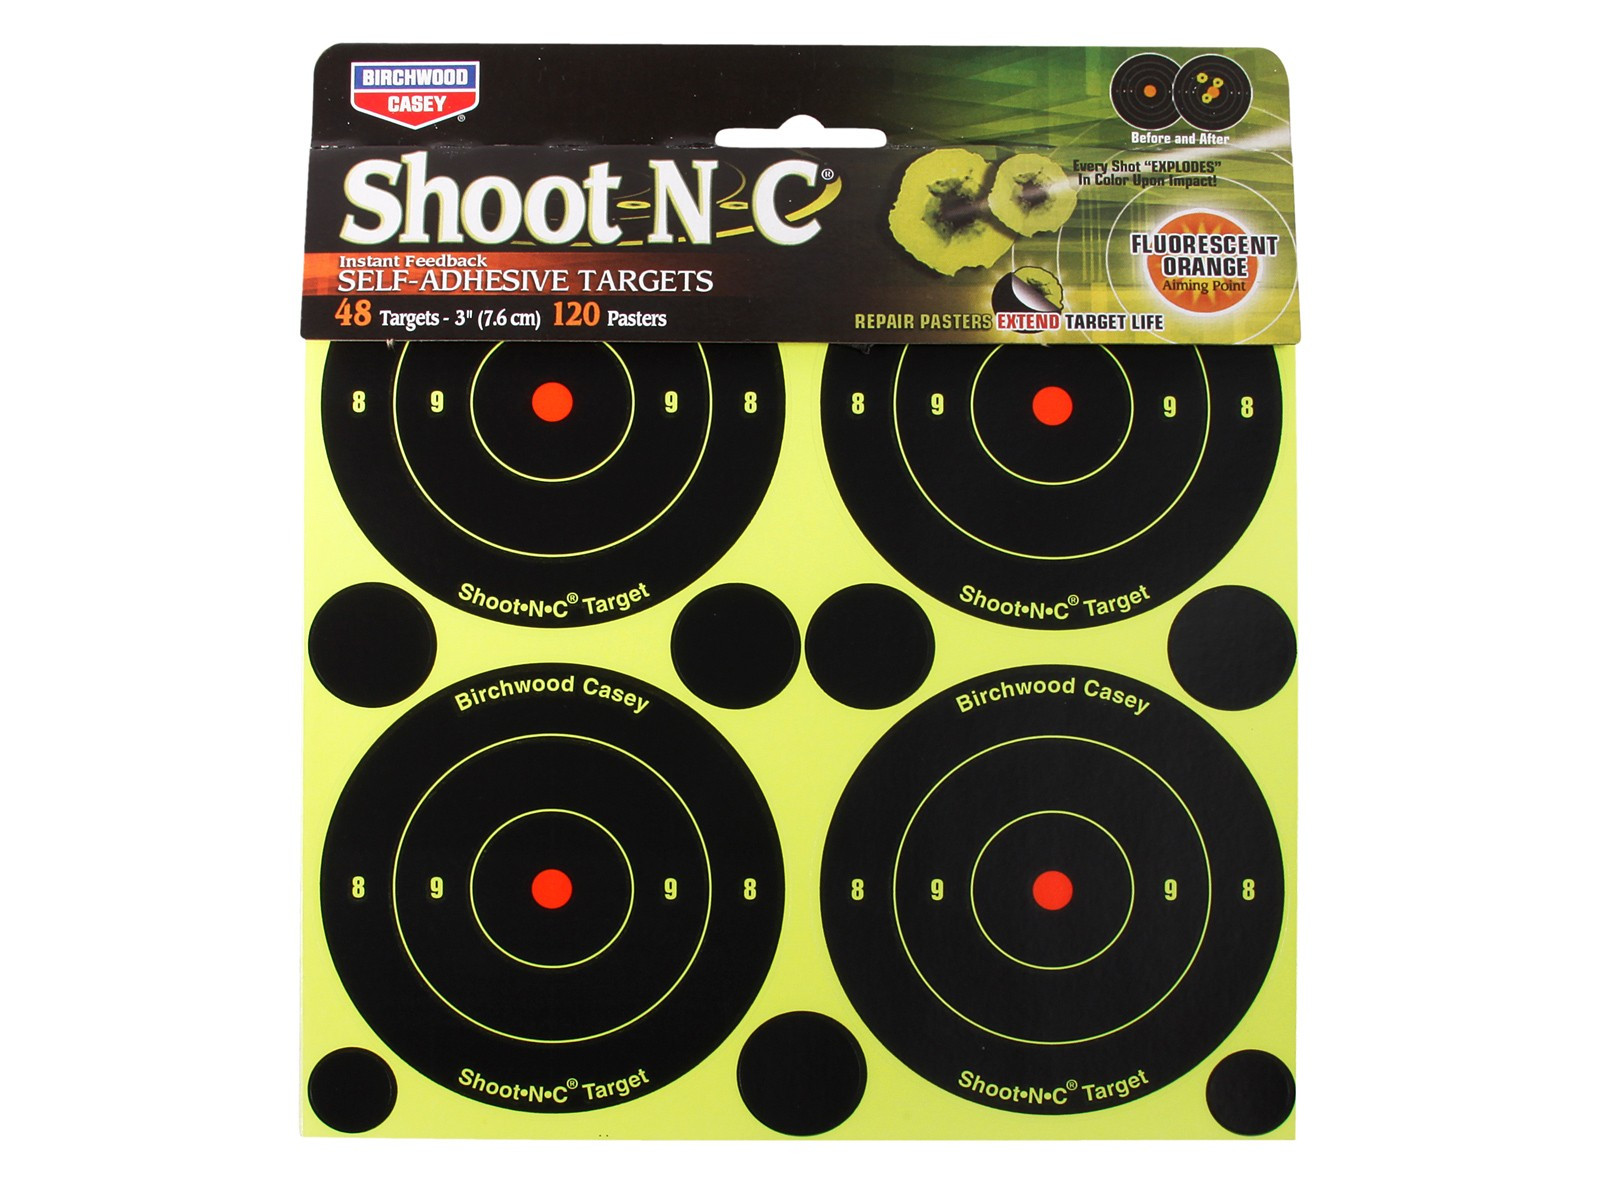 Birchwood Casey Shoot-N-C 3" Bullseye Targets